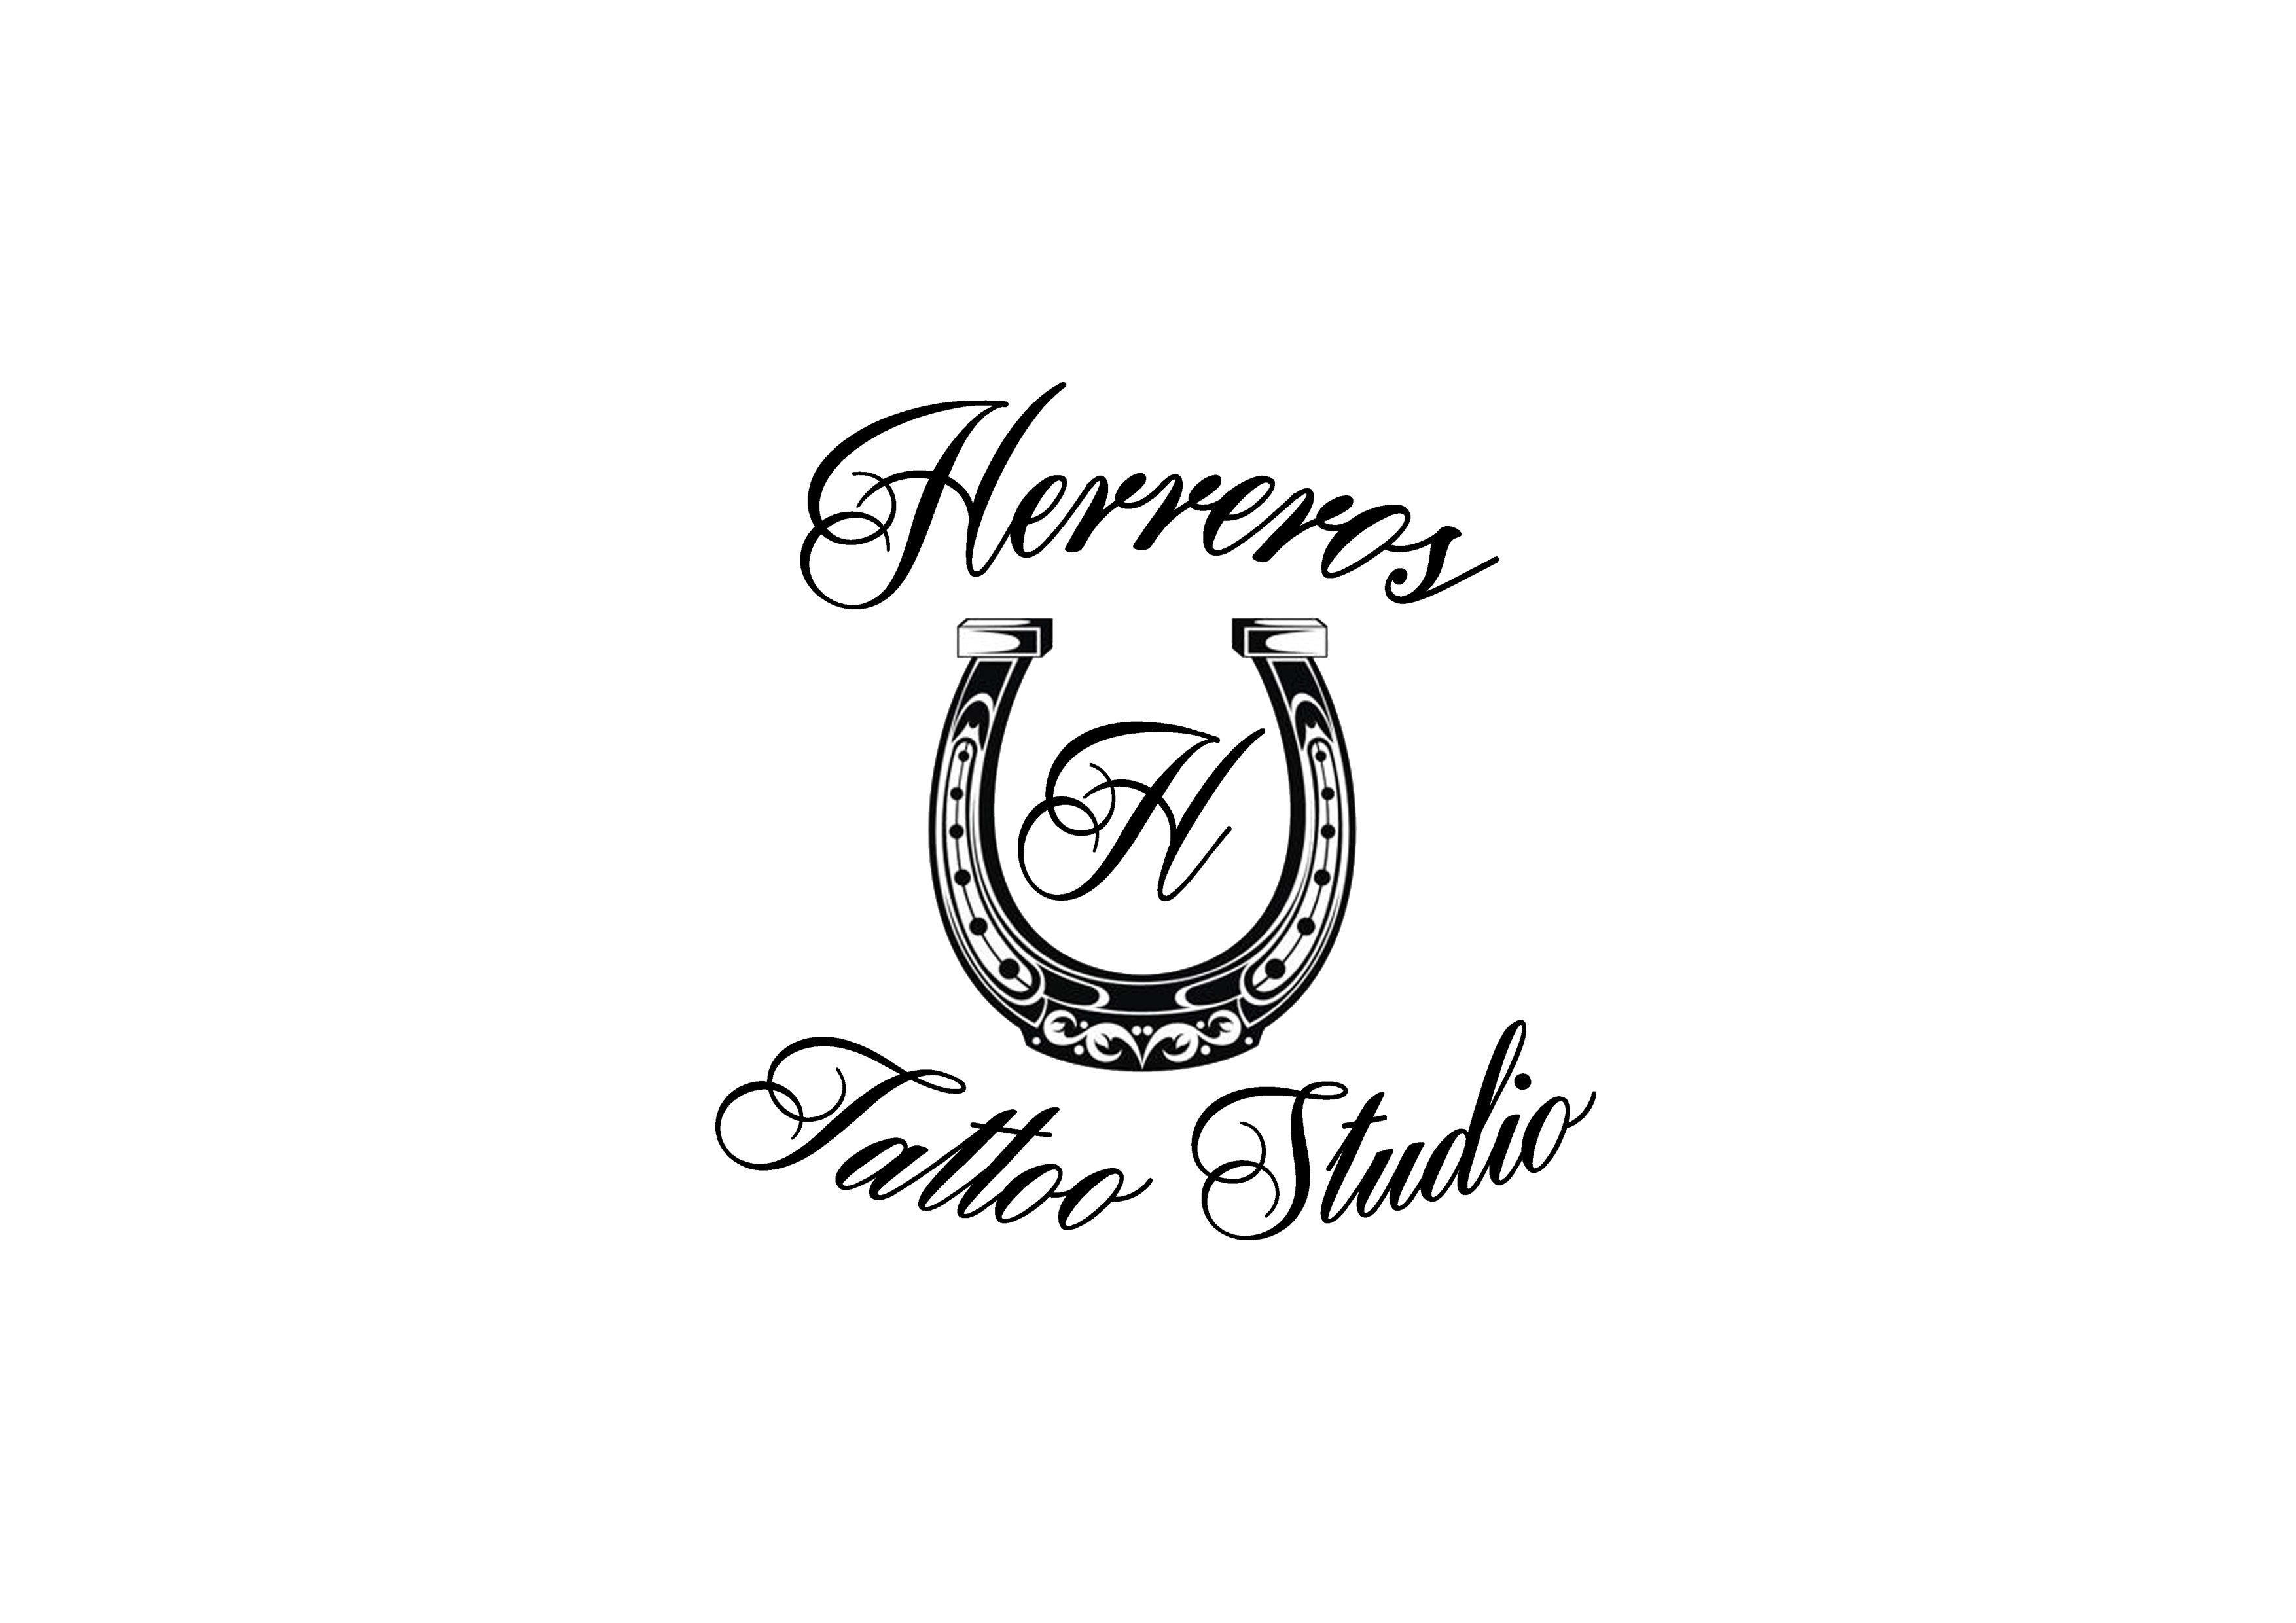 Herreros tattoo studio